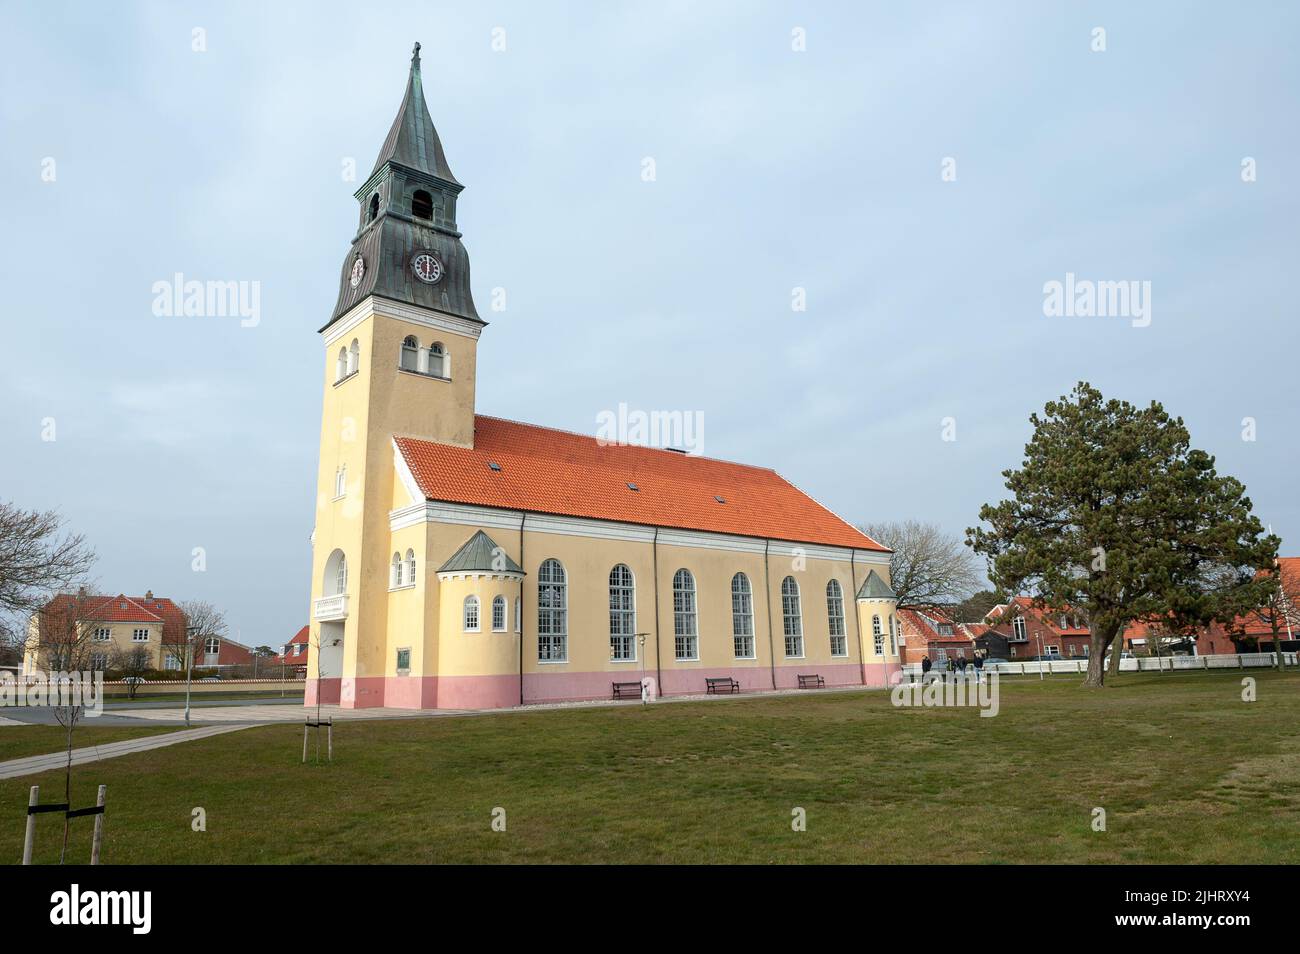 Skagen, Frederikshavn Municipality, North Jutland Region, Denmark Stock Photo